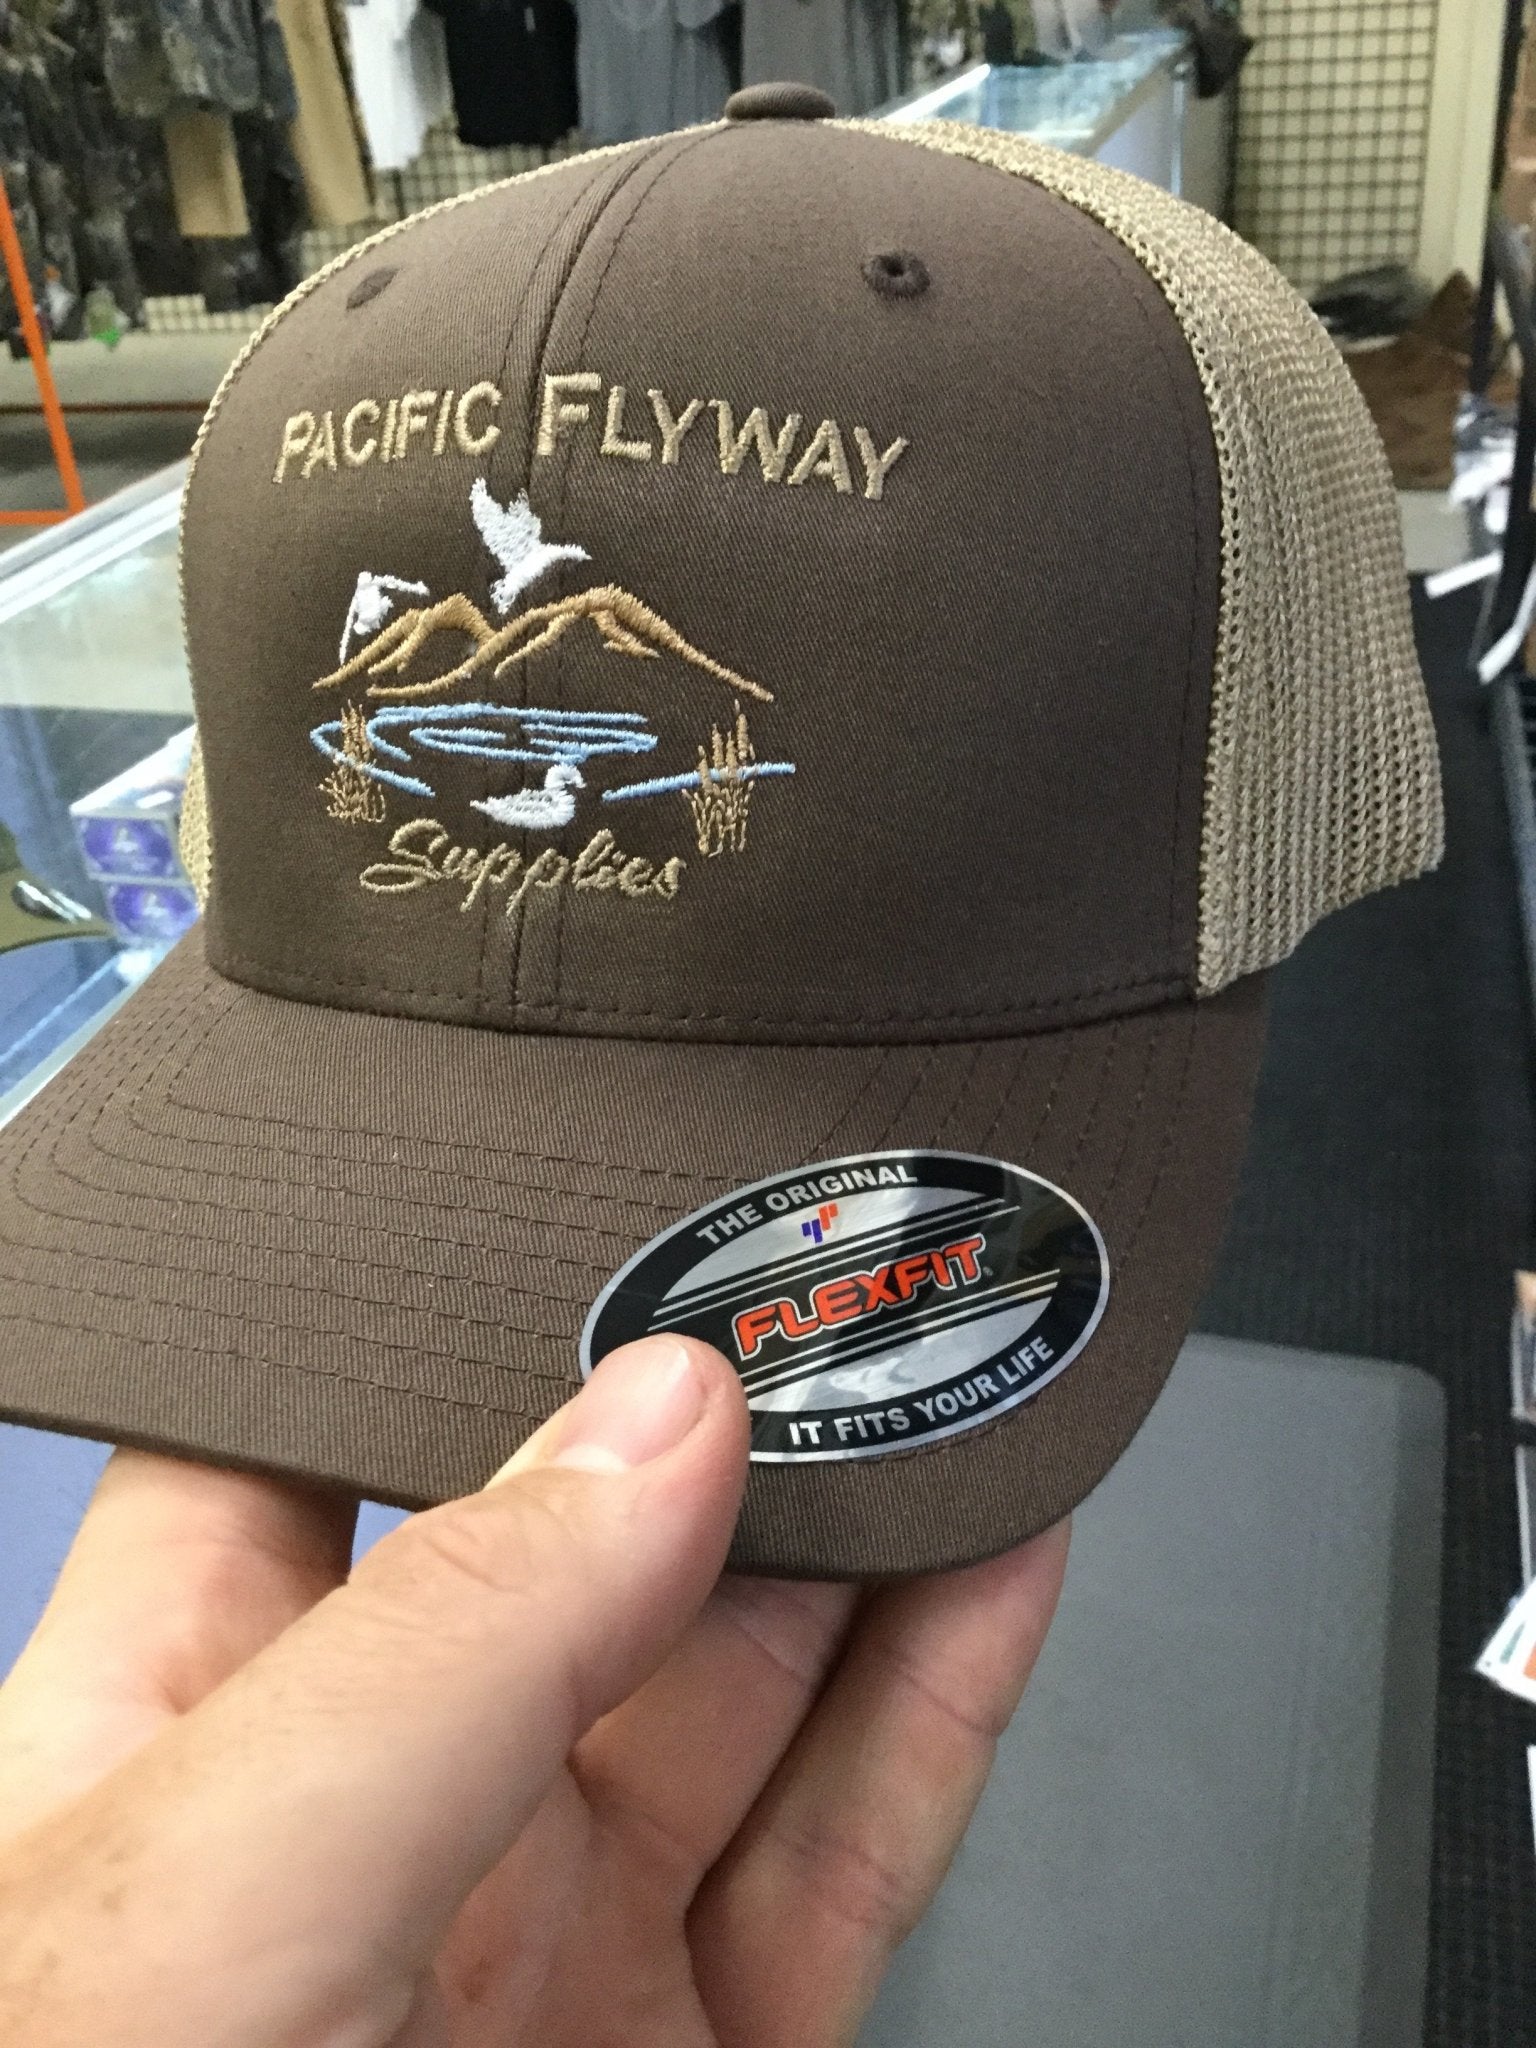 Pacific Flyway Supplies Logo Mesh Back Flex Fit Hat Brown/Tan - Pacific Flyway Supplies